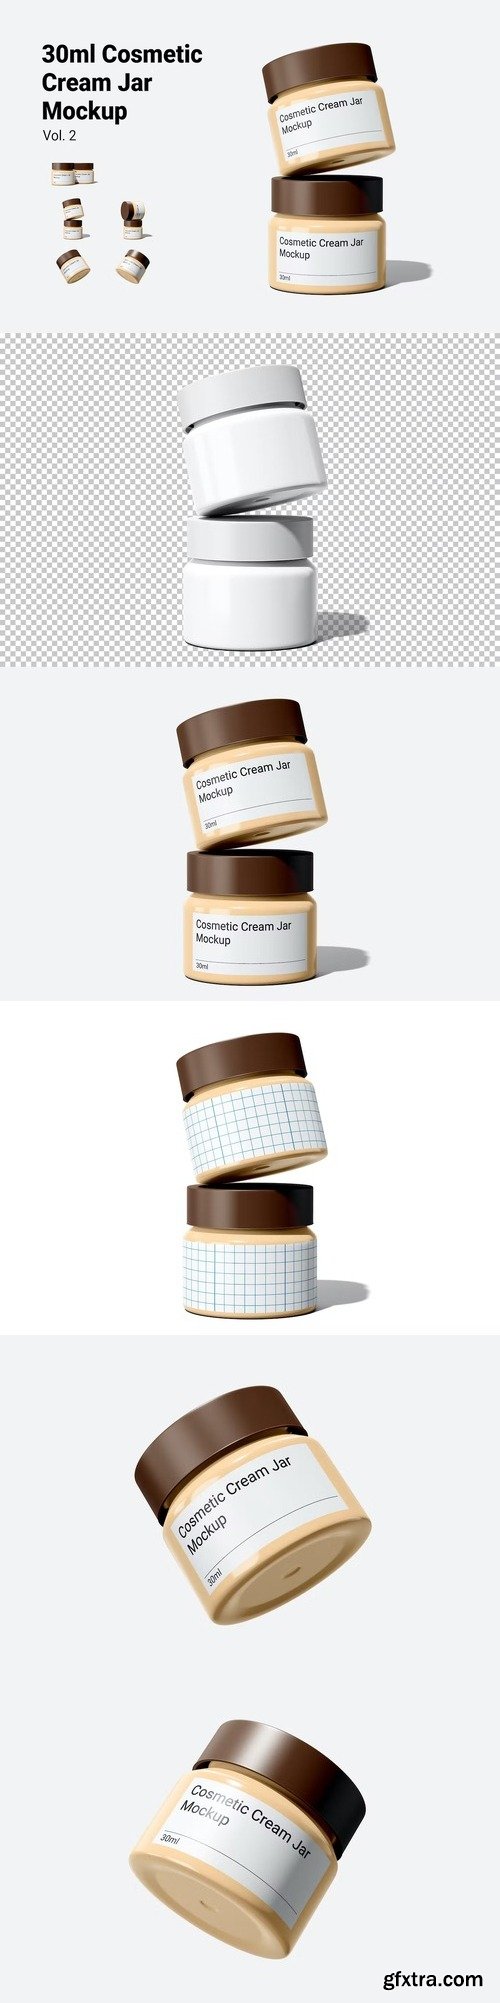 Cosmetic Cream Jar Mockup Vol.2 SKB8VEX